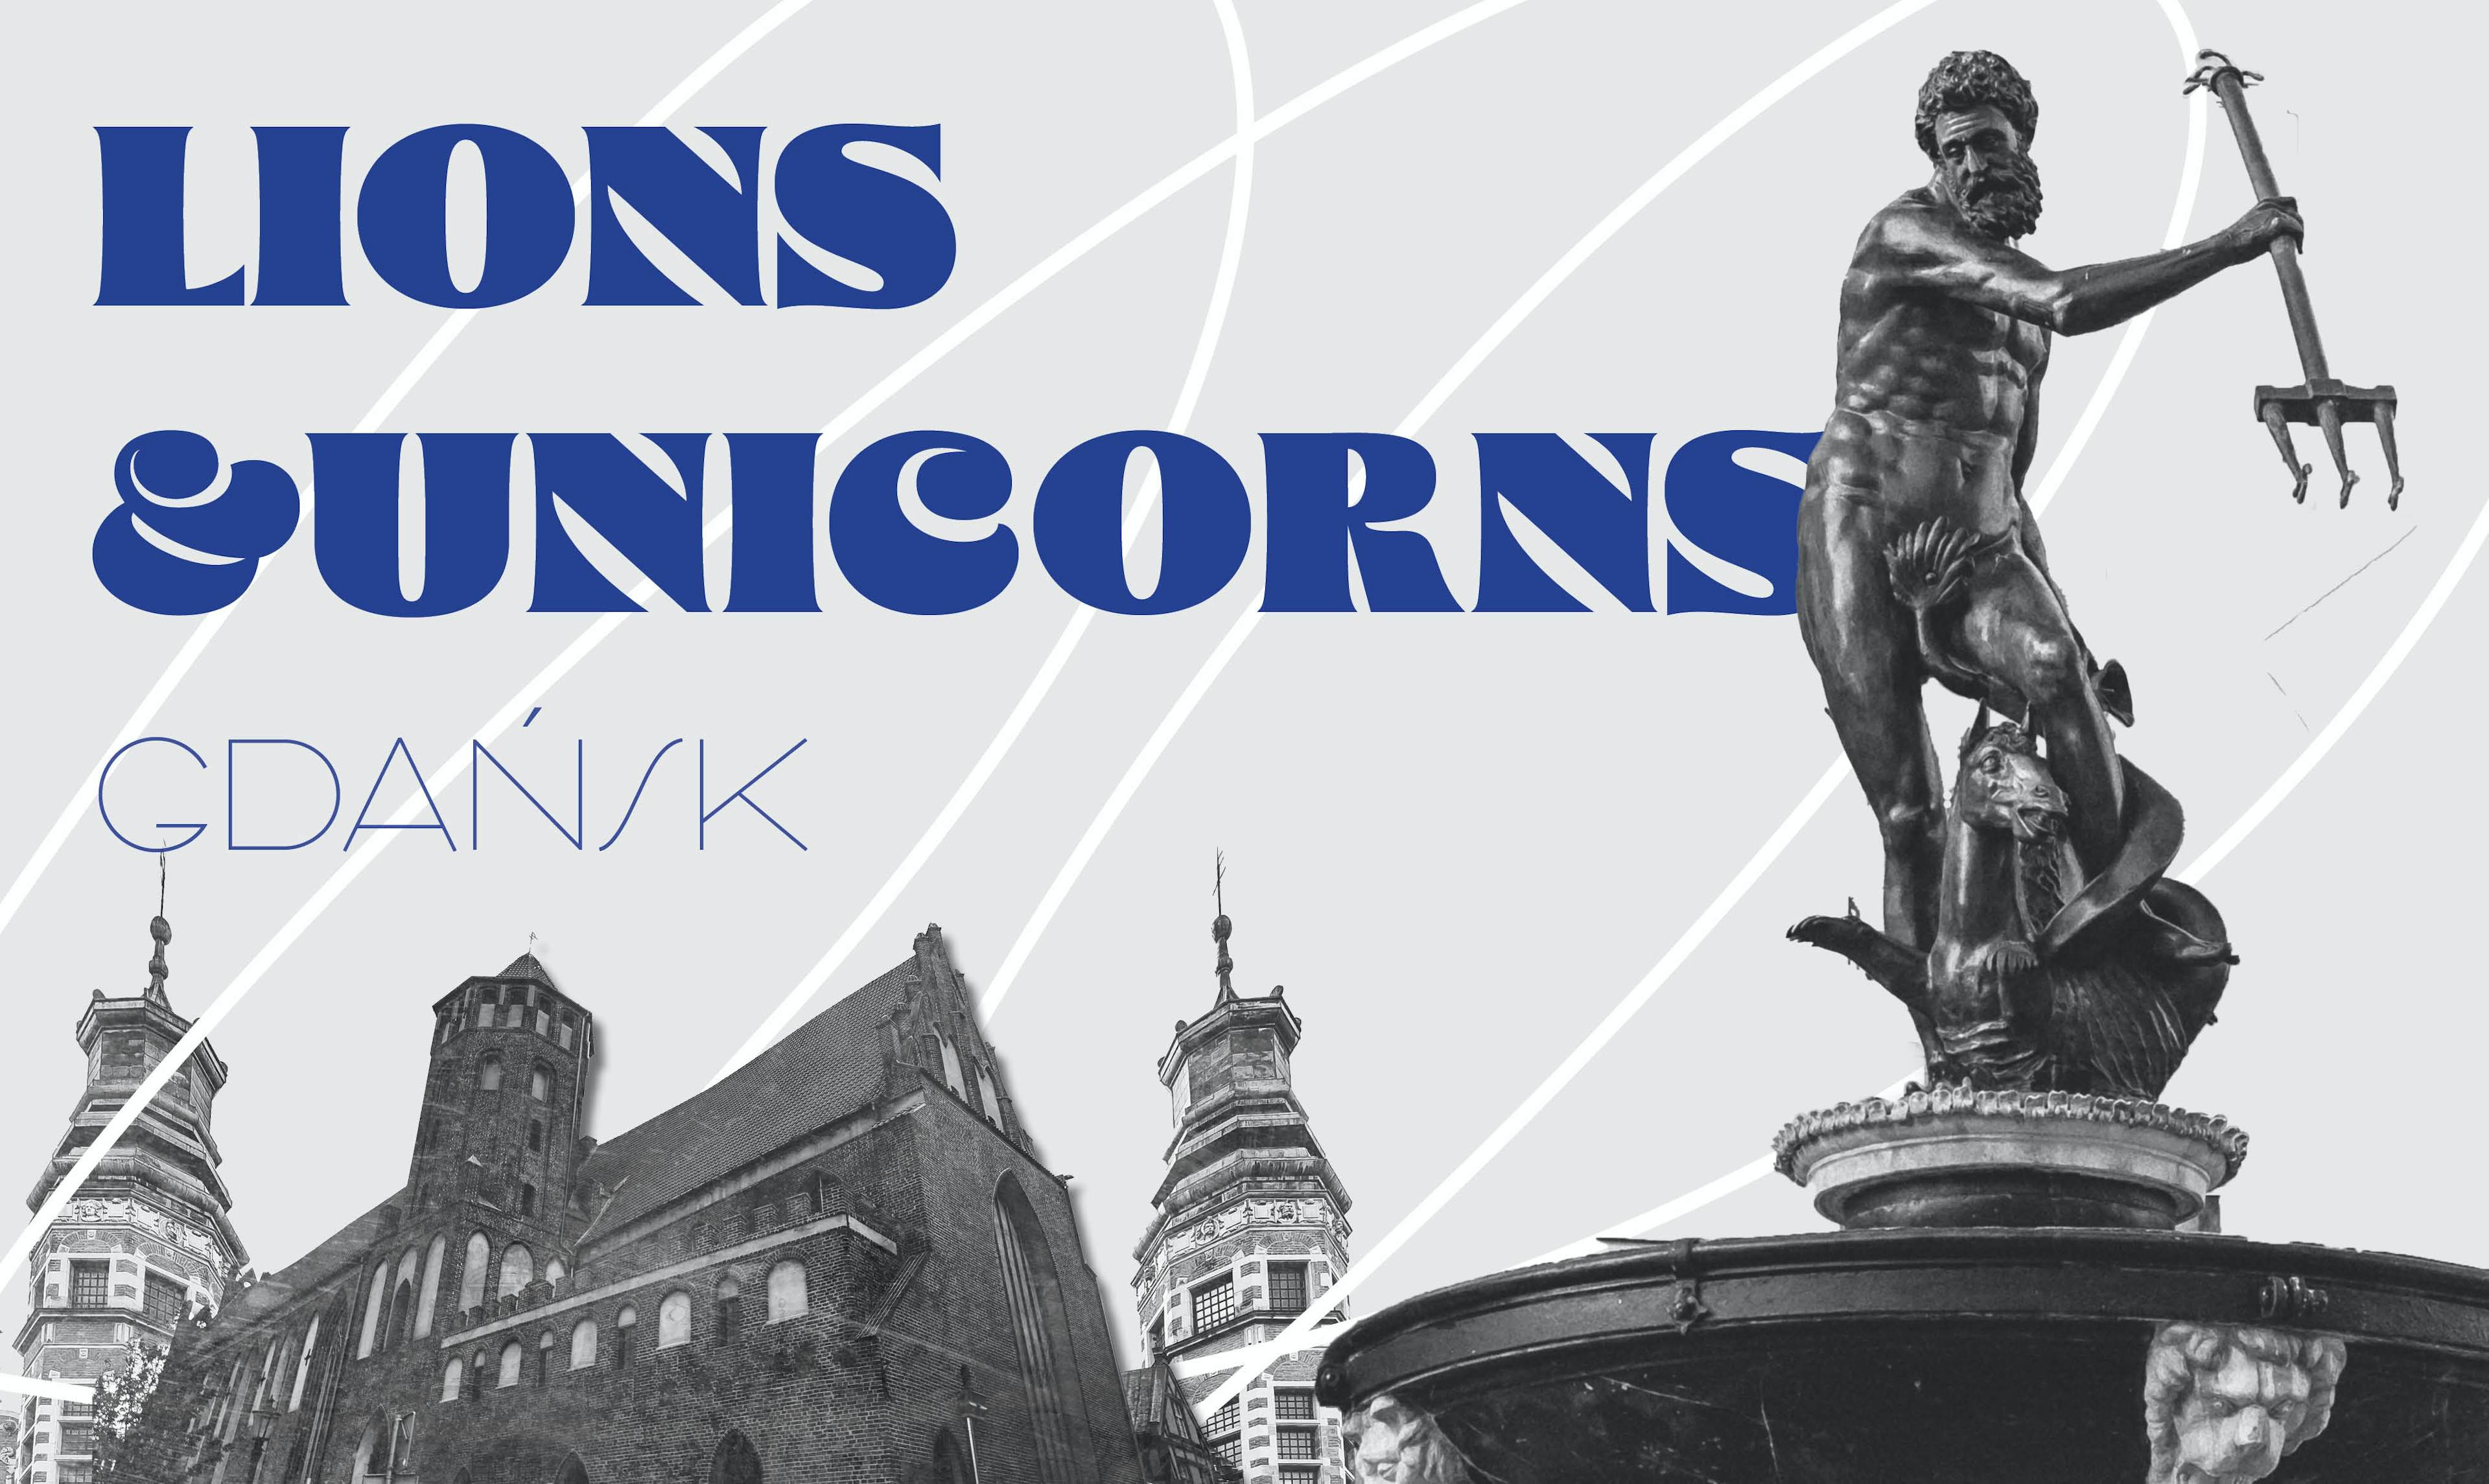 Fantastic Gdansk: Lions and Unicorns image